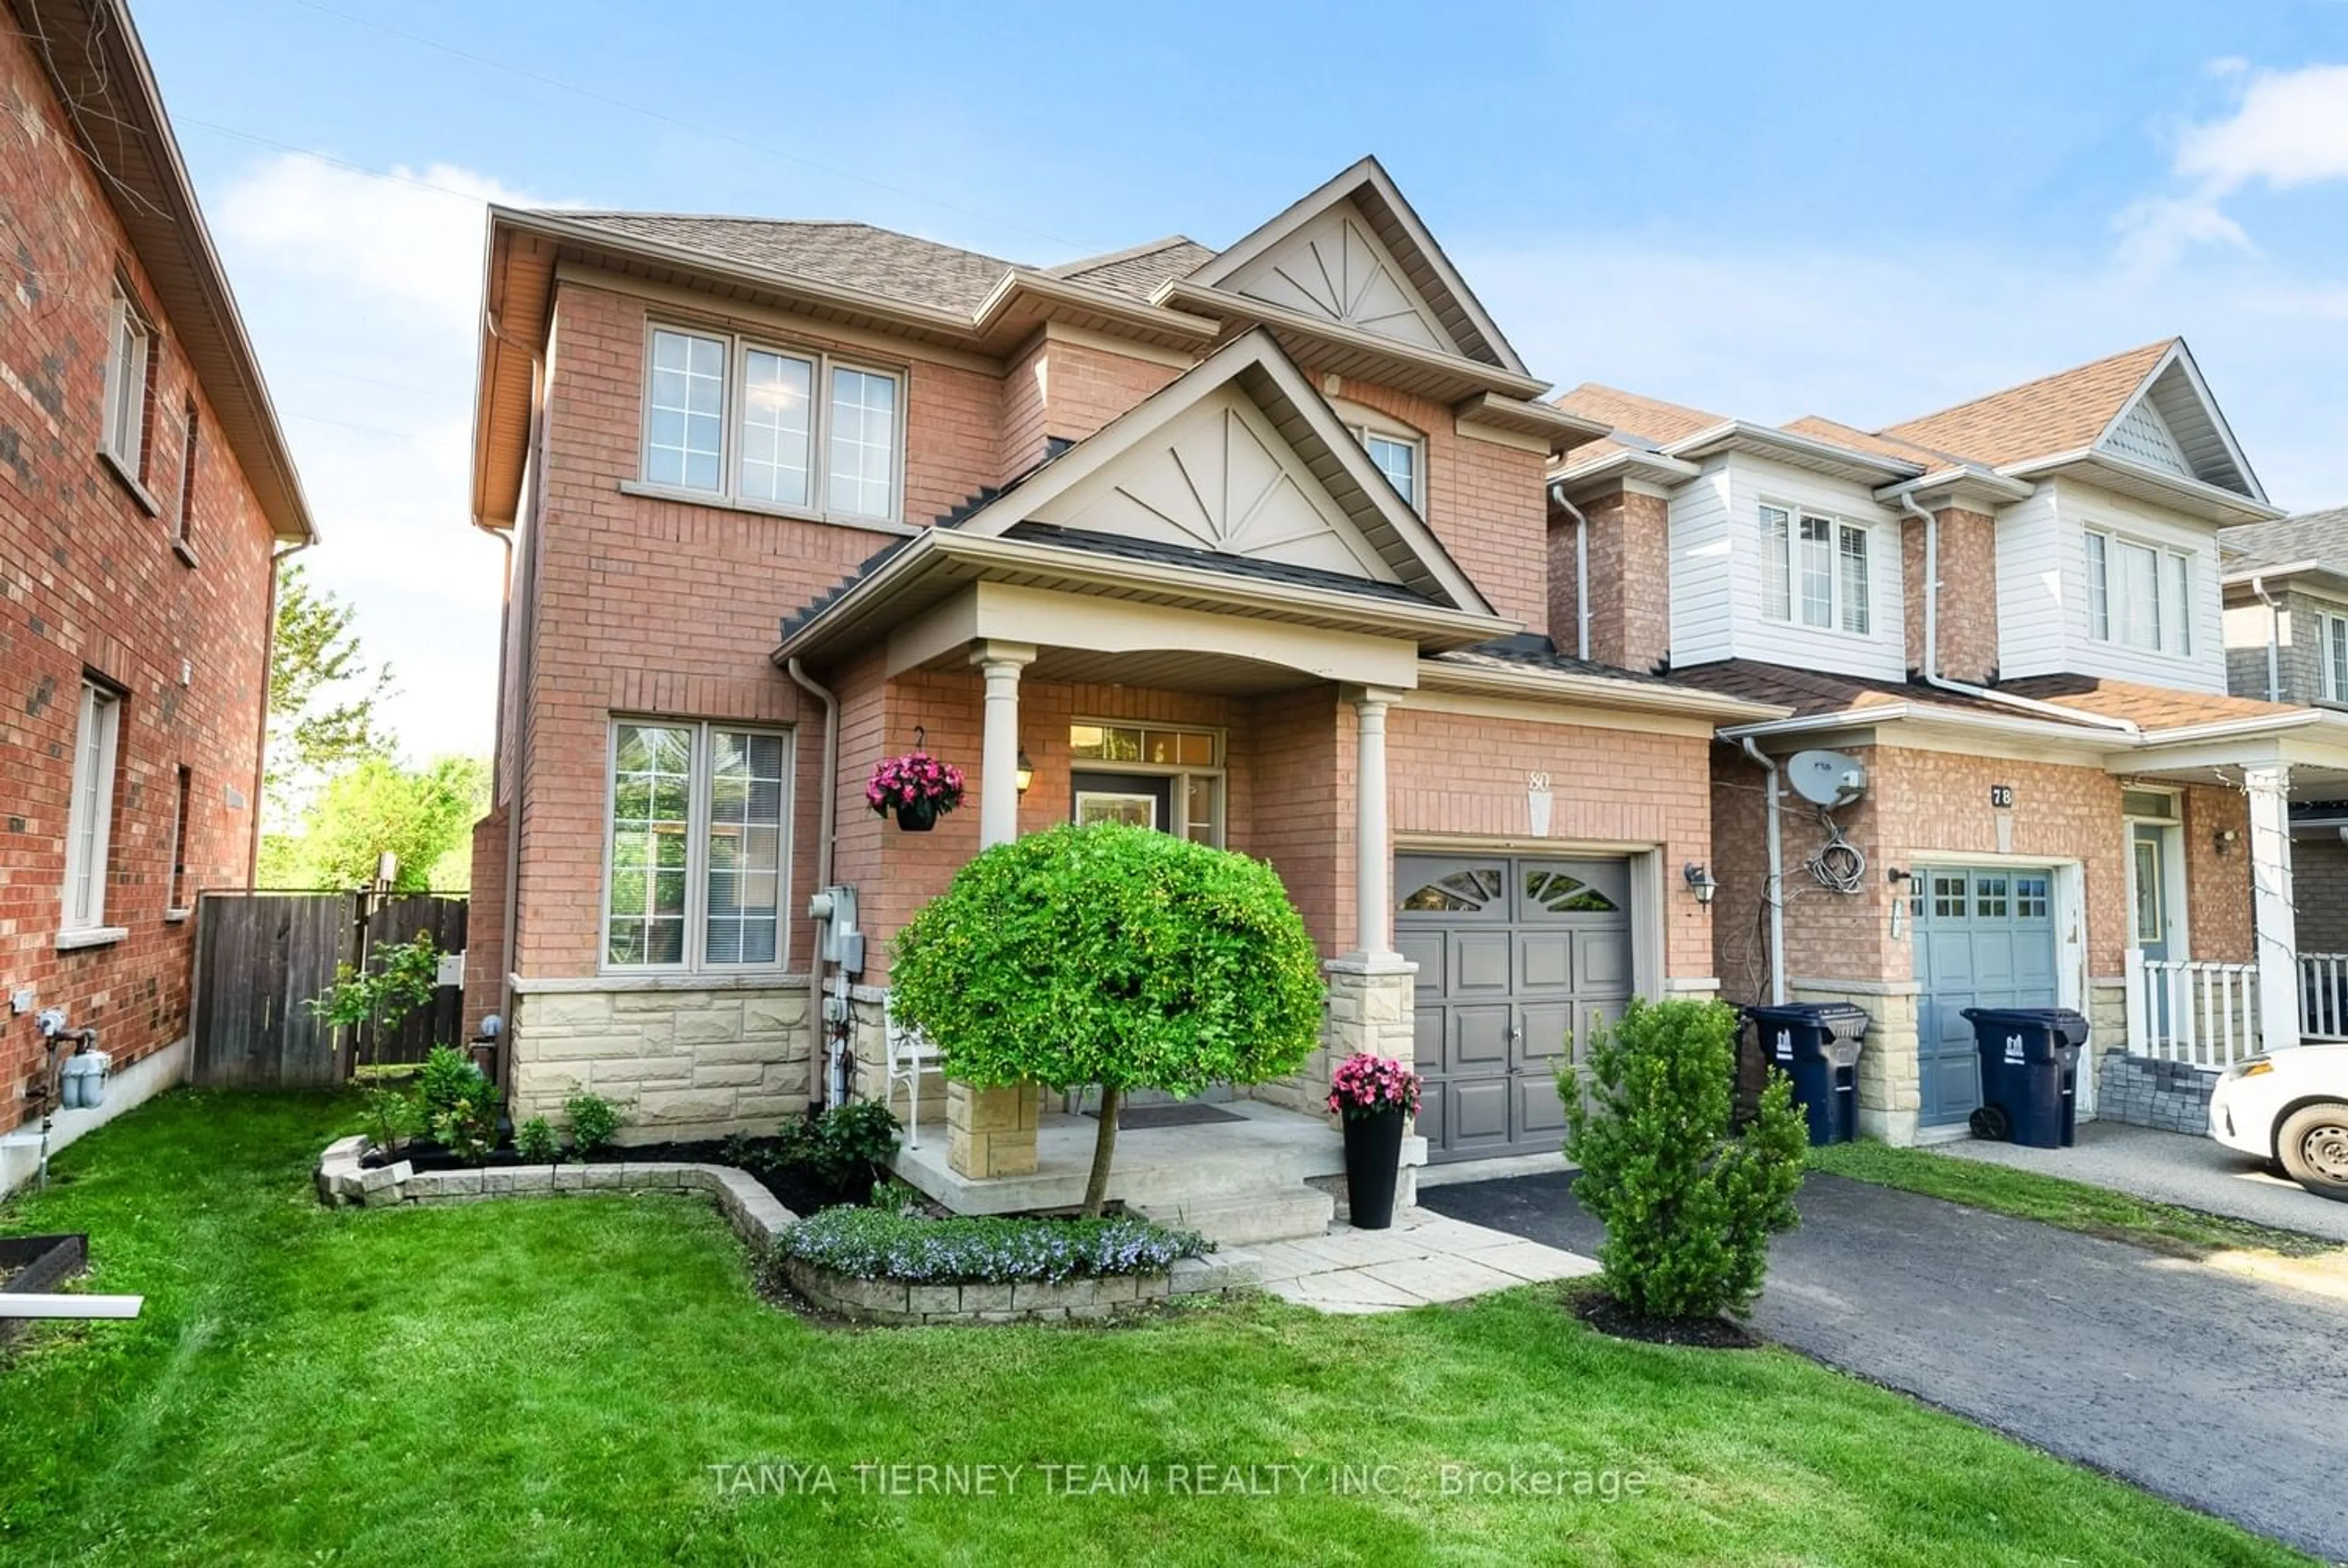 Home with brick exterior material for 80 Pogonia St, Toronto Ontario M1X 1Z5